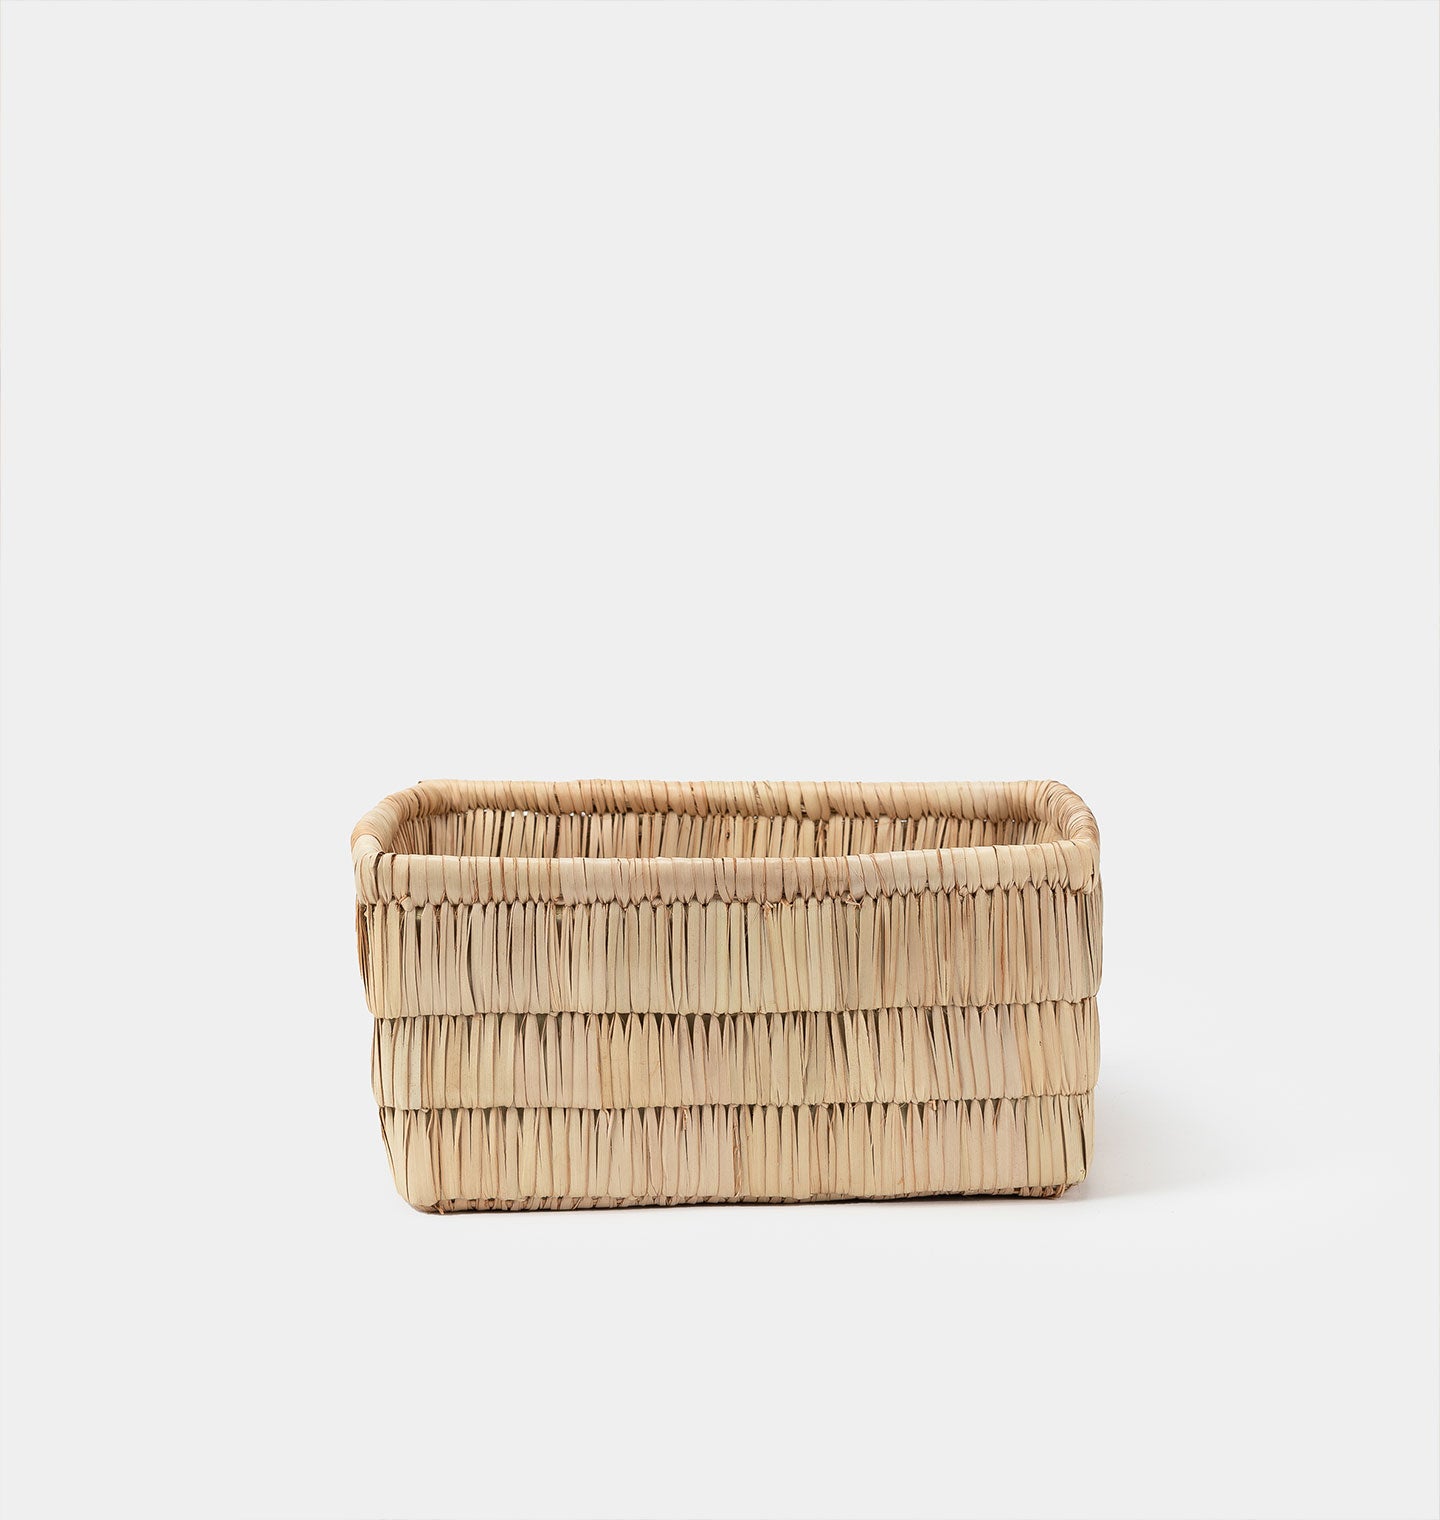 Katondo Weave Storage Basket